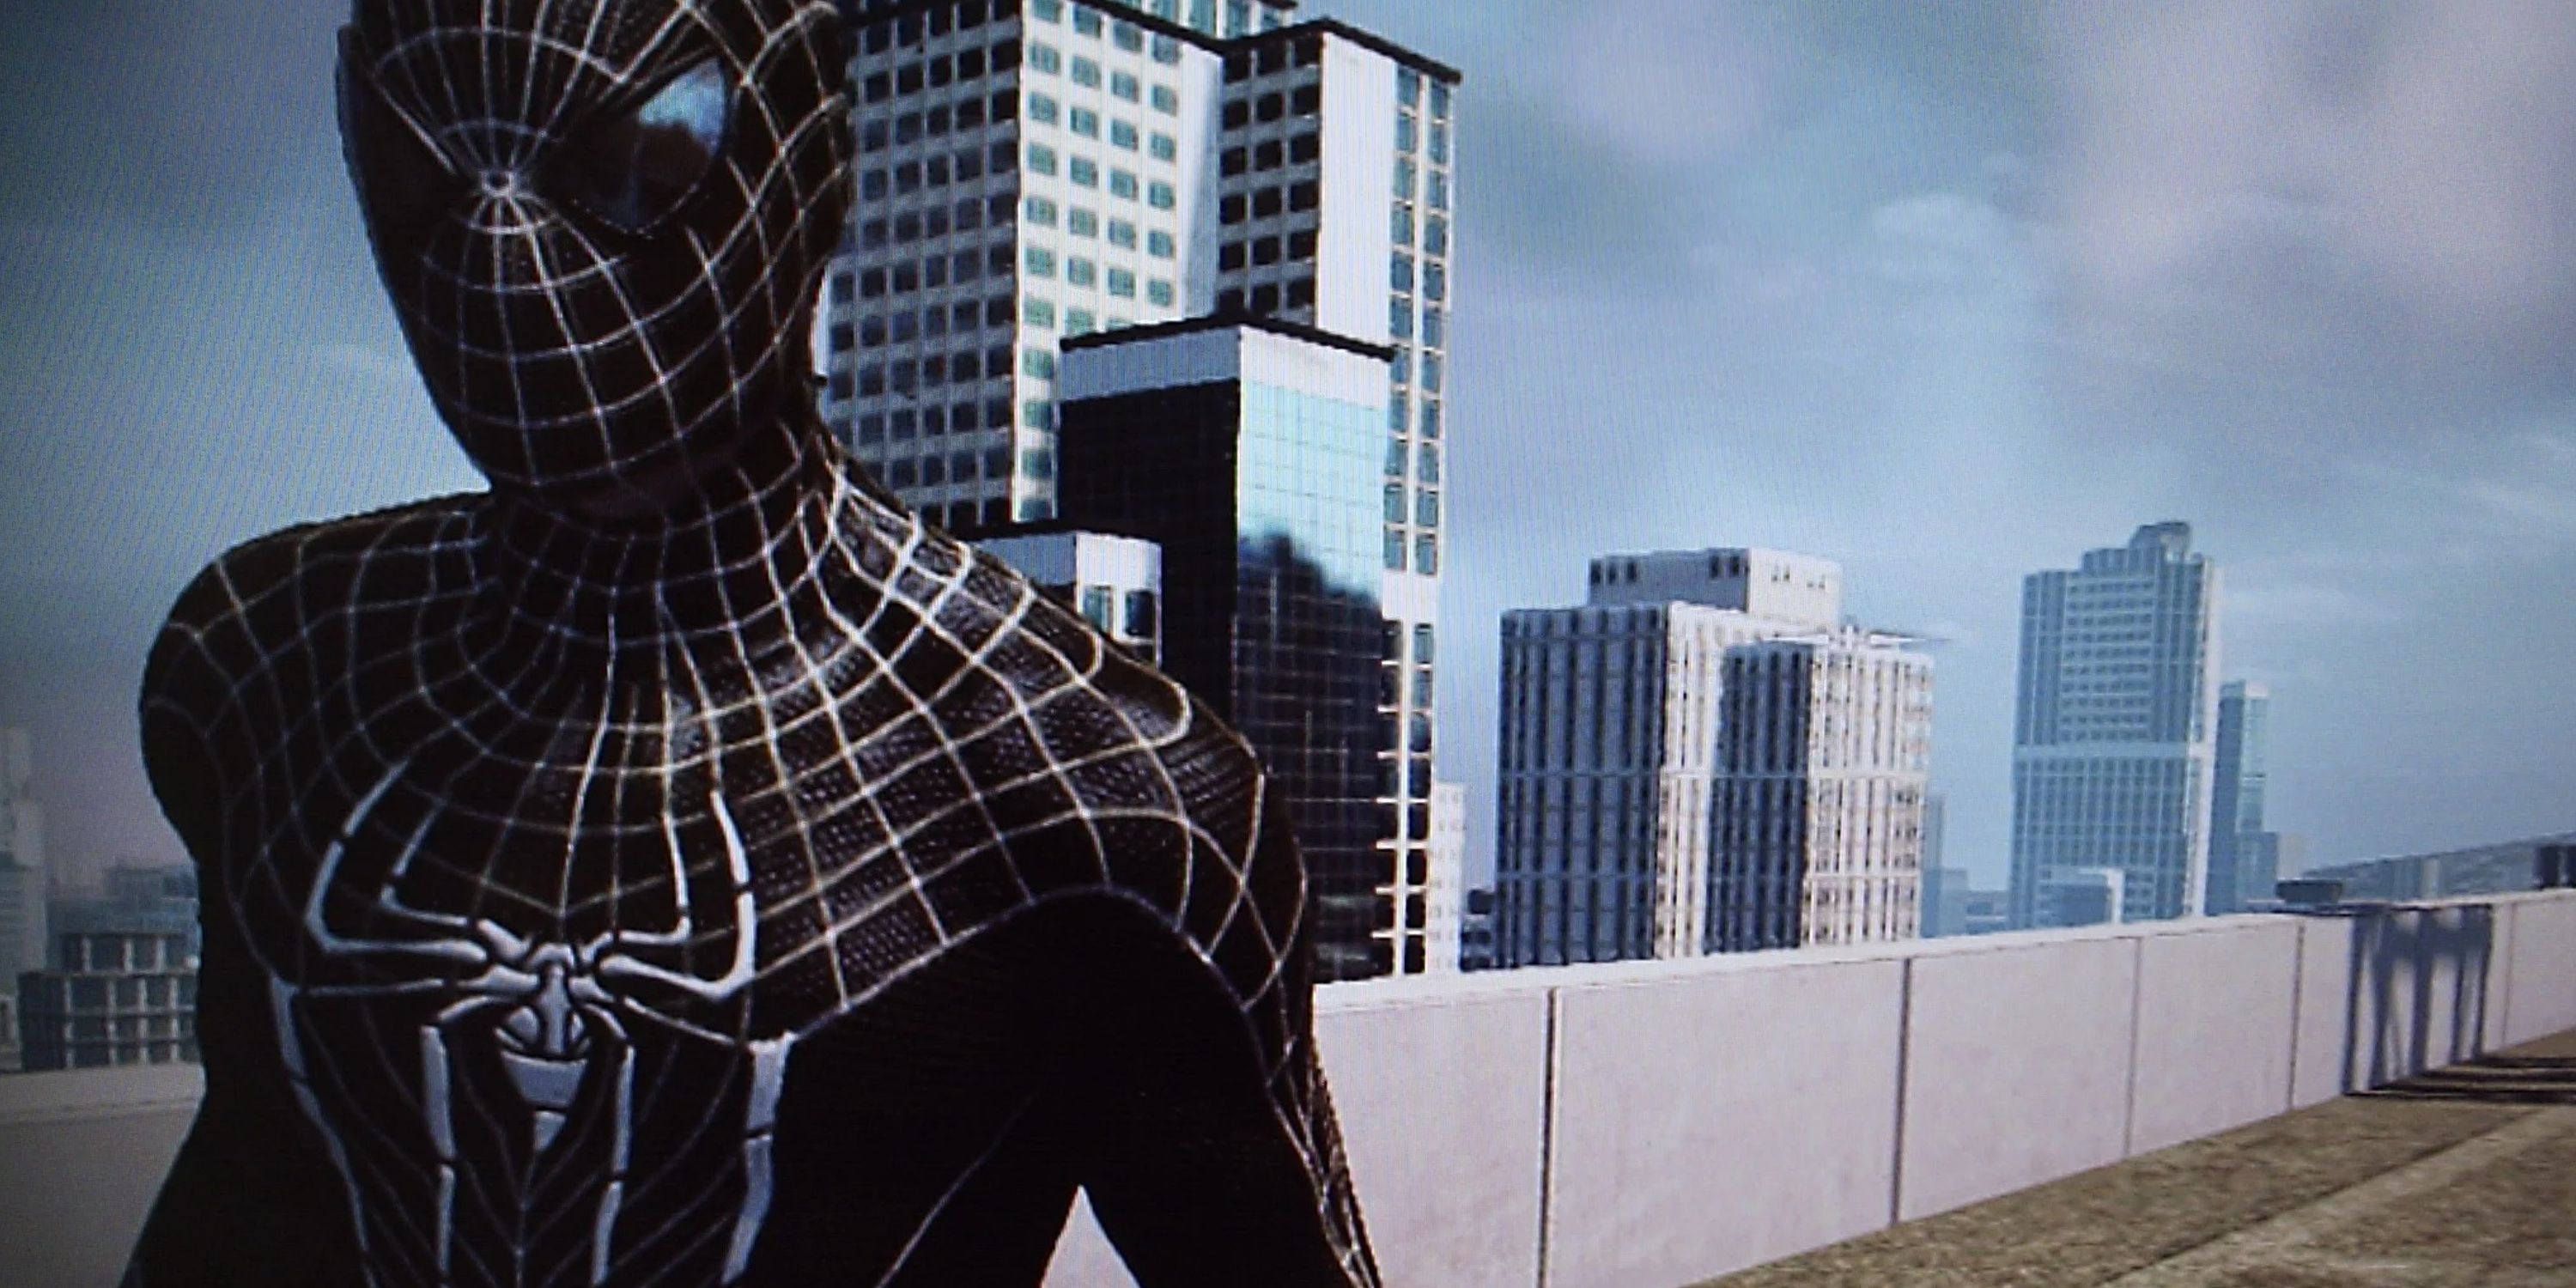 2012 game based on 2012 movie, Spider-Man in Black Suit